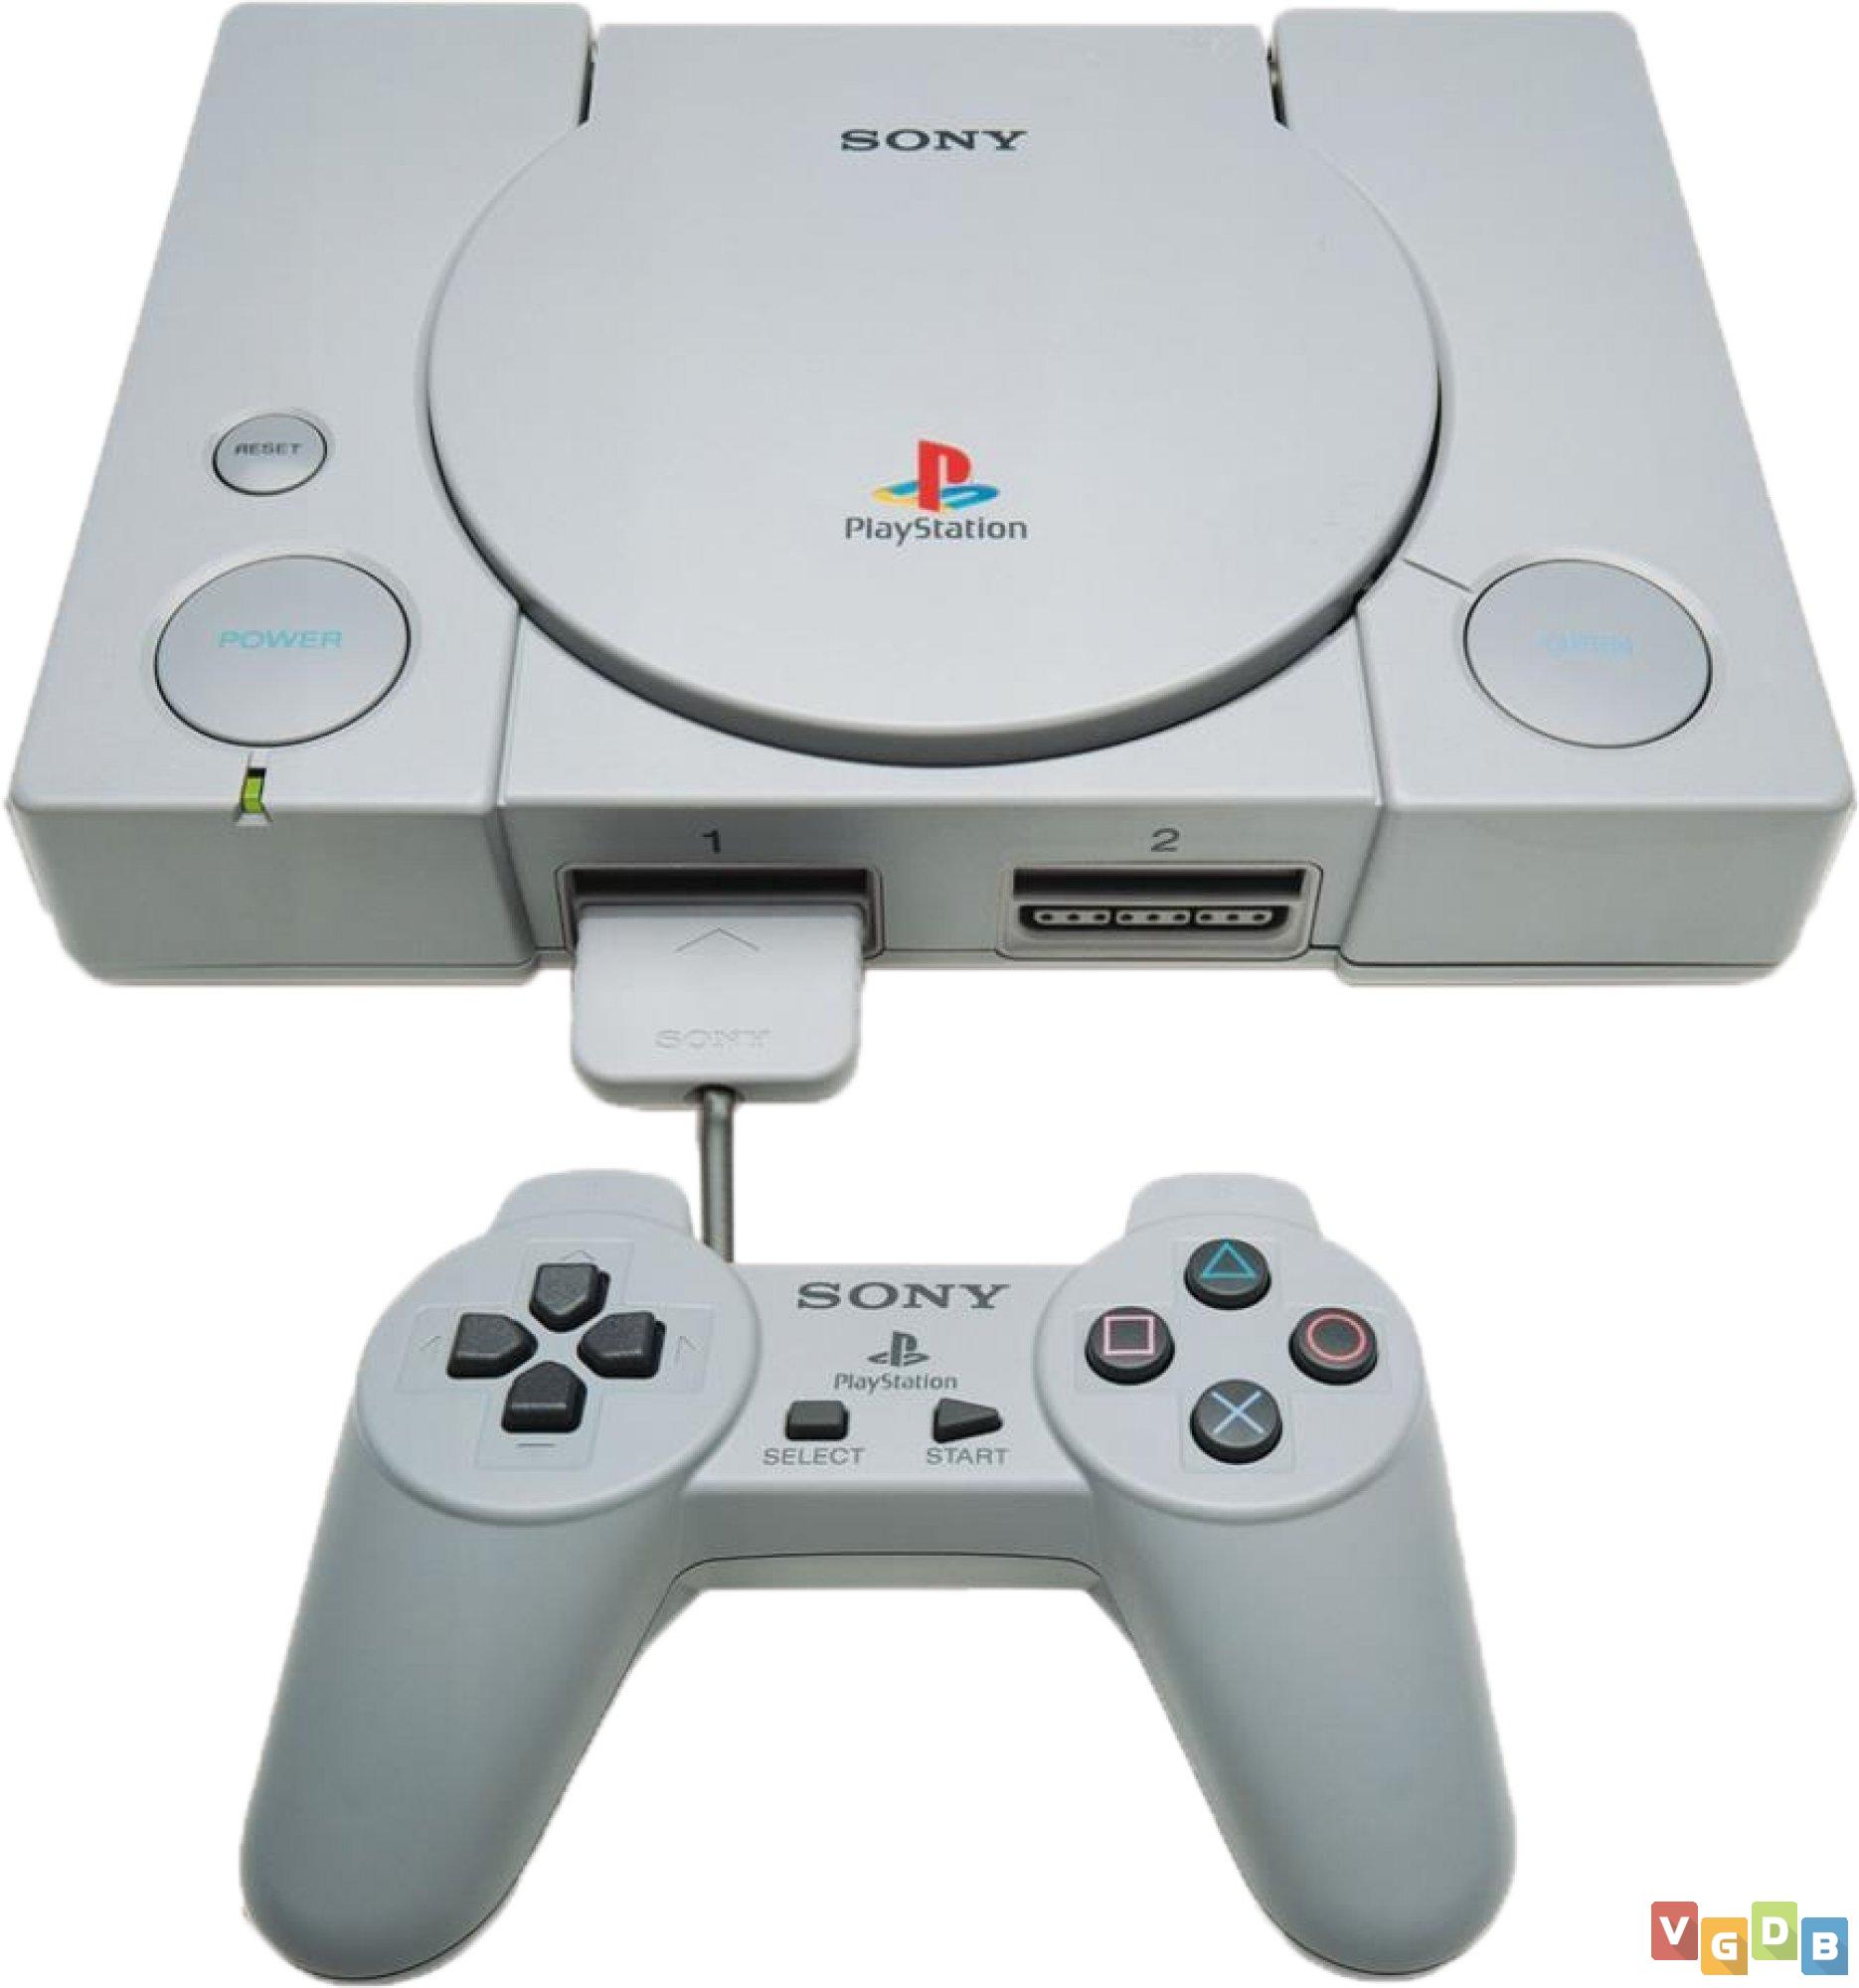 Preços baixos em Sony Playstation 1 Futebol 1998 Video Games